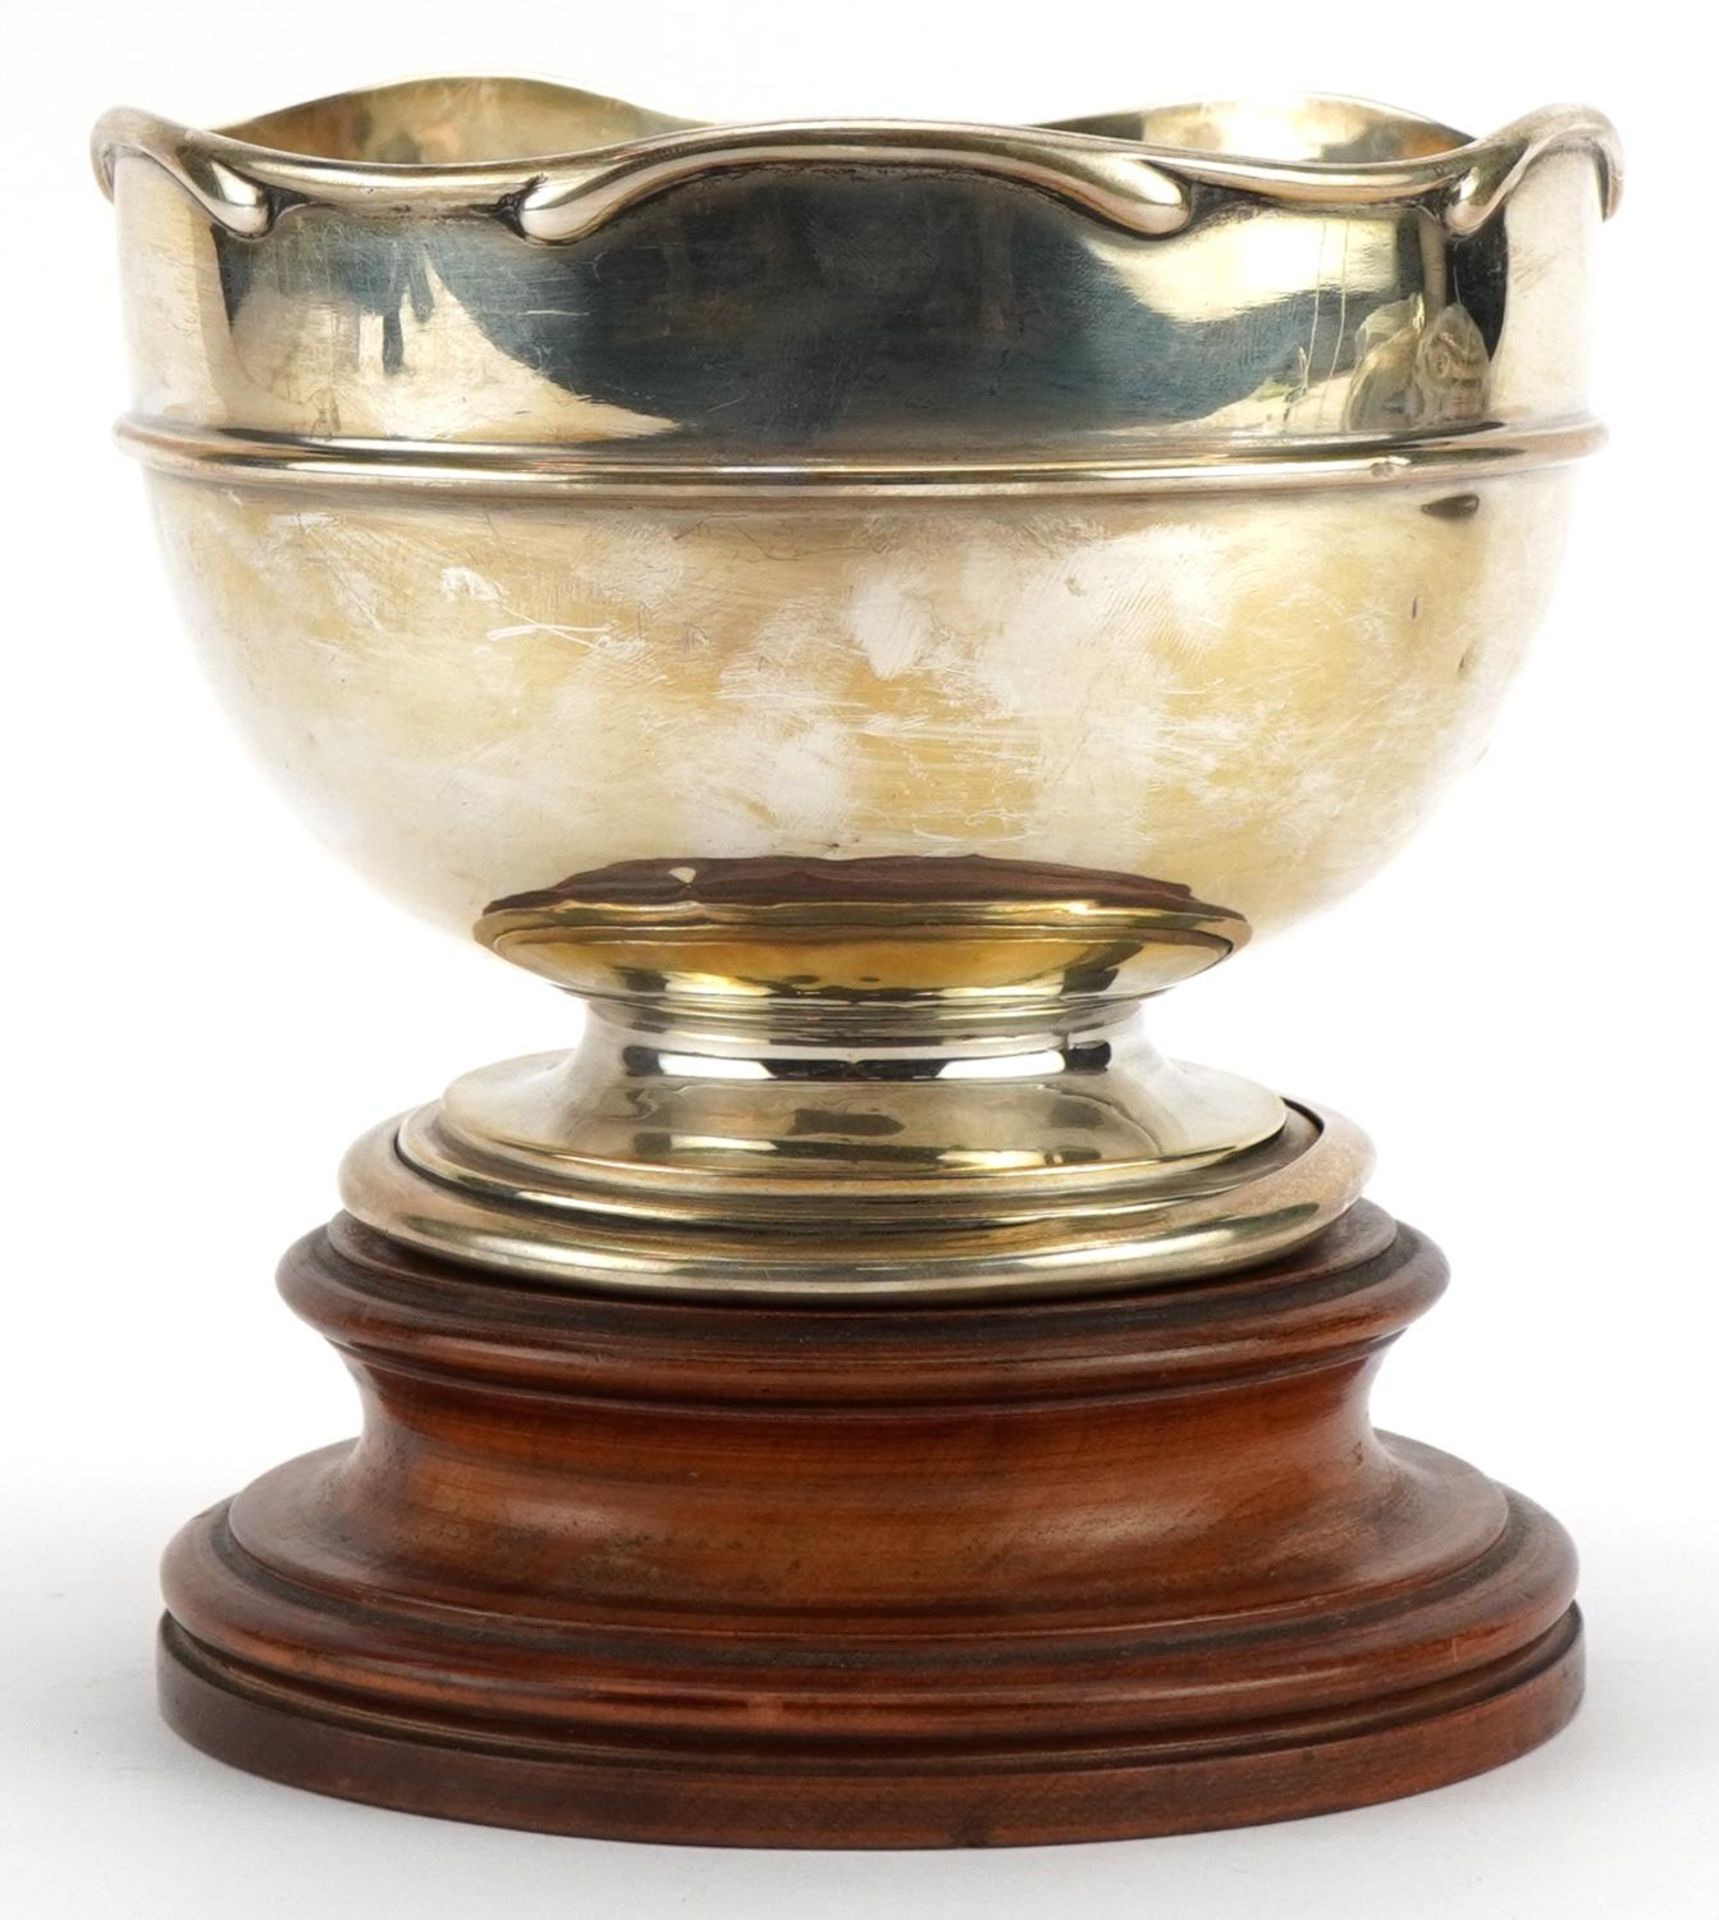 A & J Zimmerman Ltd, Edwardian silver pedestal bowl raised on a turned wood base, 13.5cm high x 12cm